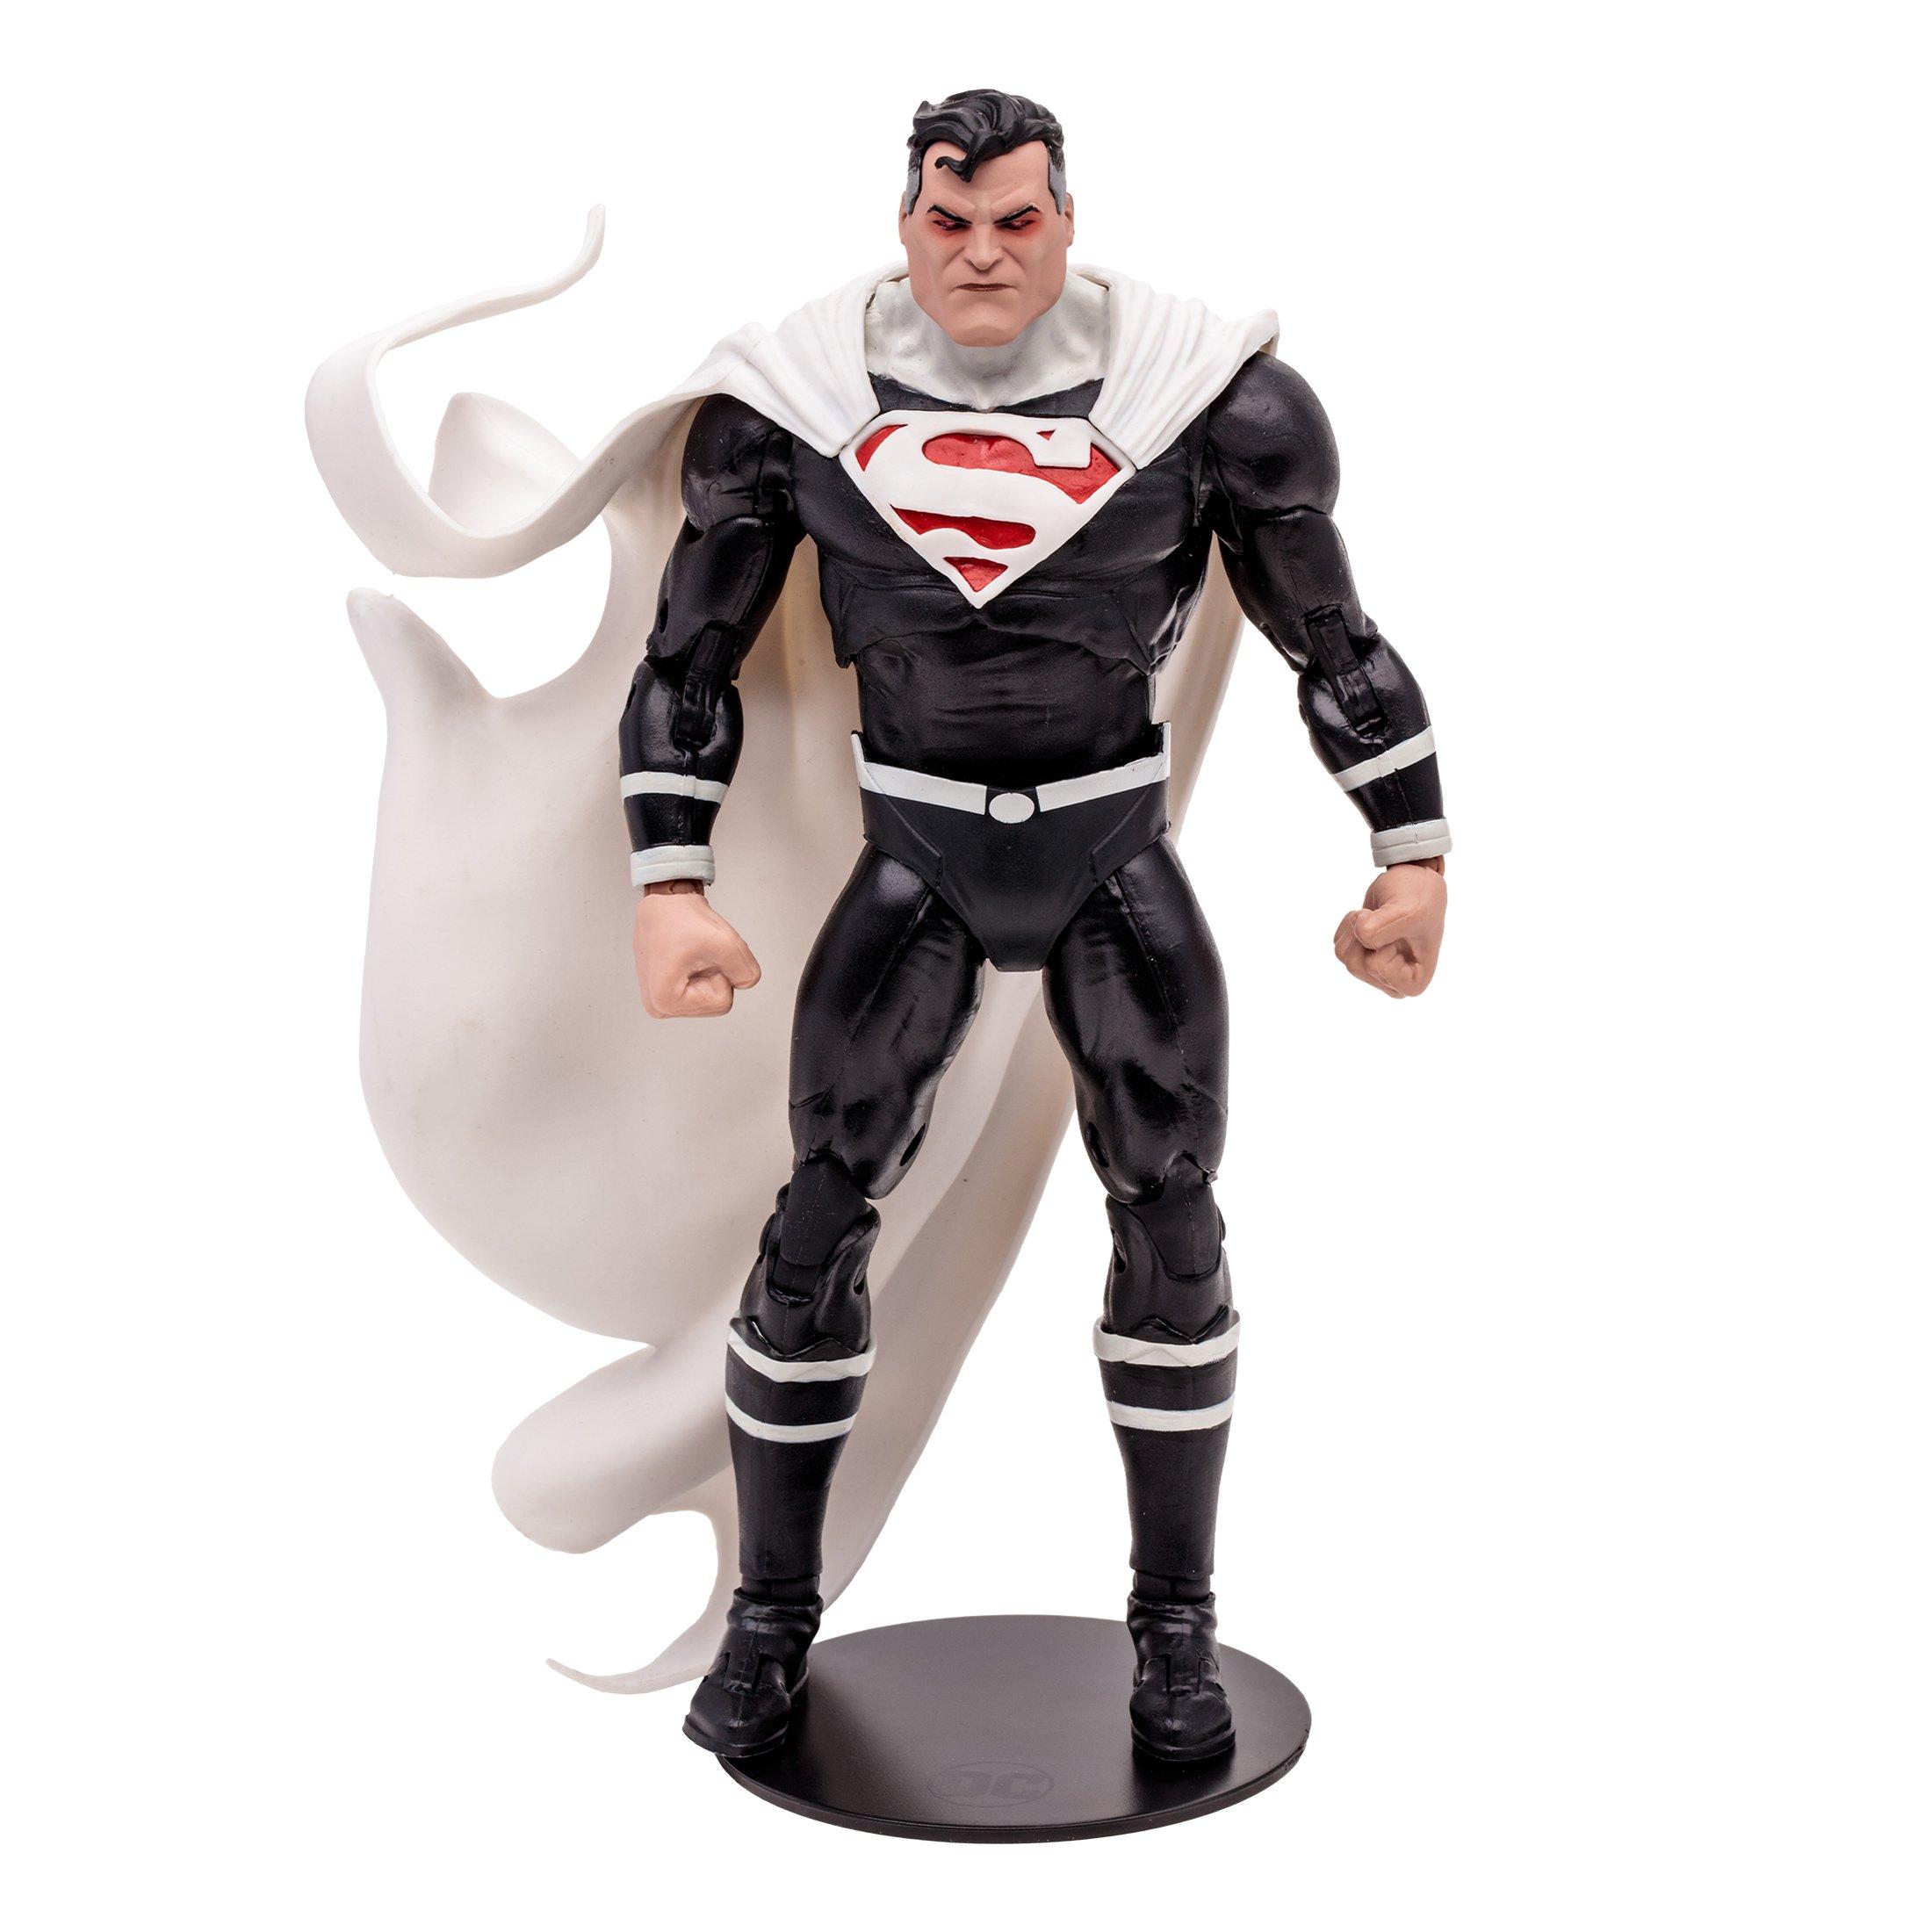 McFarlane Toys DC Multiverse Batman Beyond vs Justice Lord Superman Action Figure Set 2-Pack